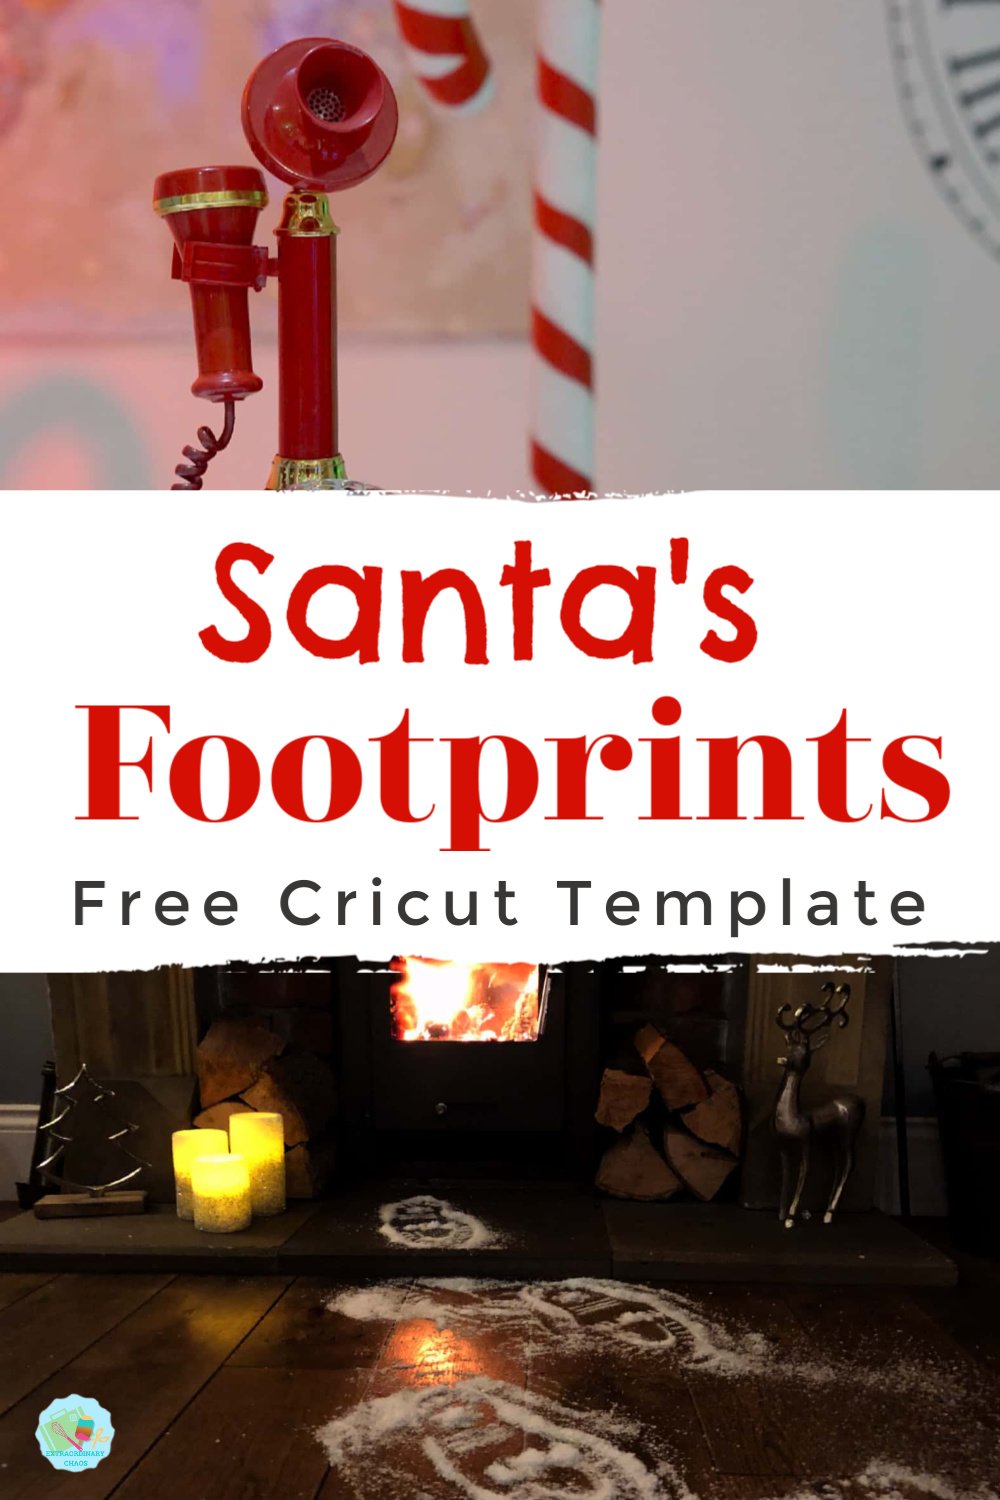 Santas Footprints Free Cricut Template